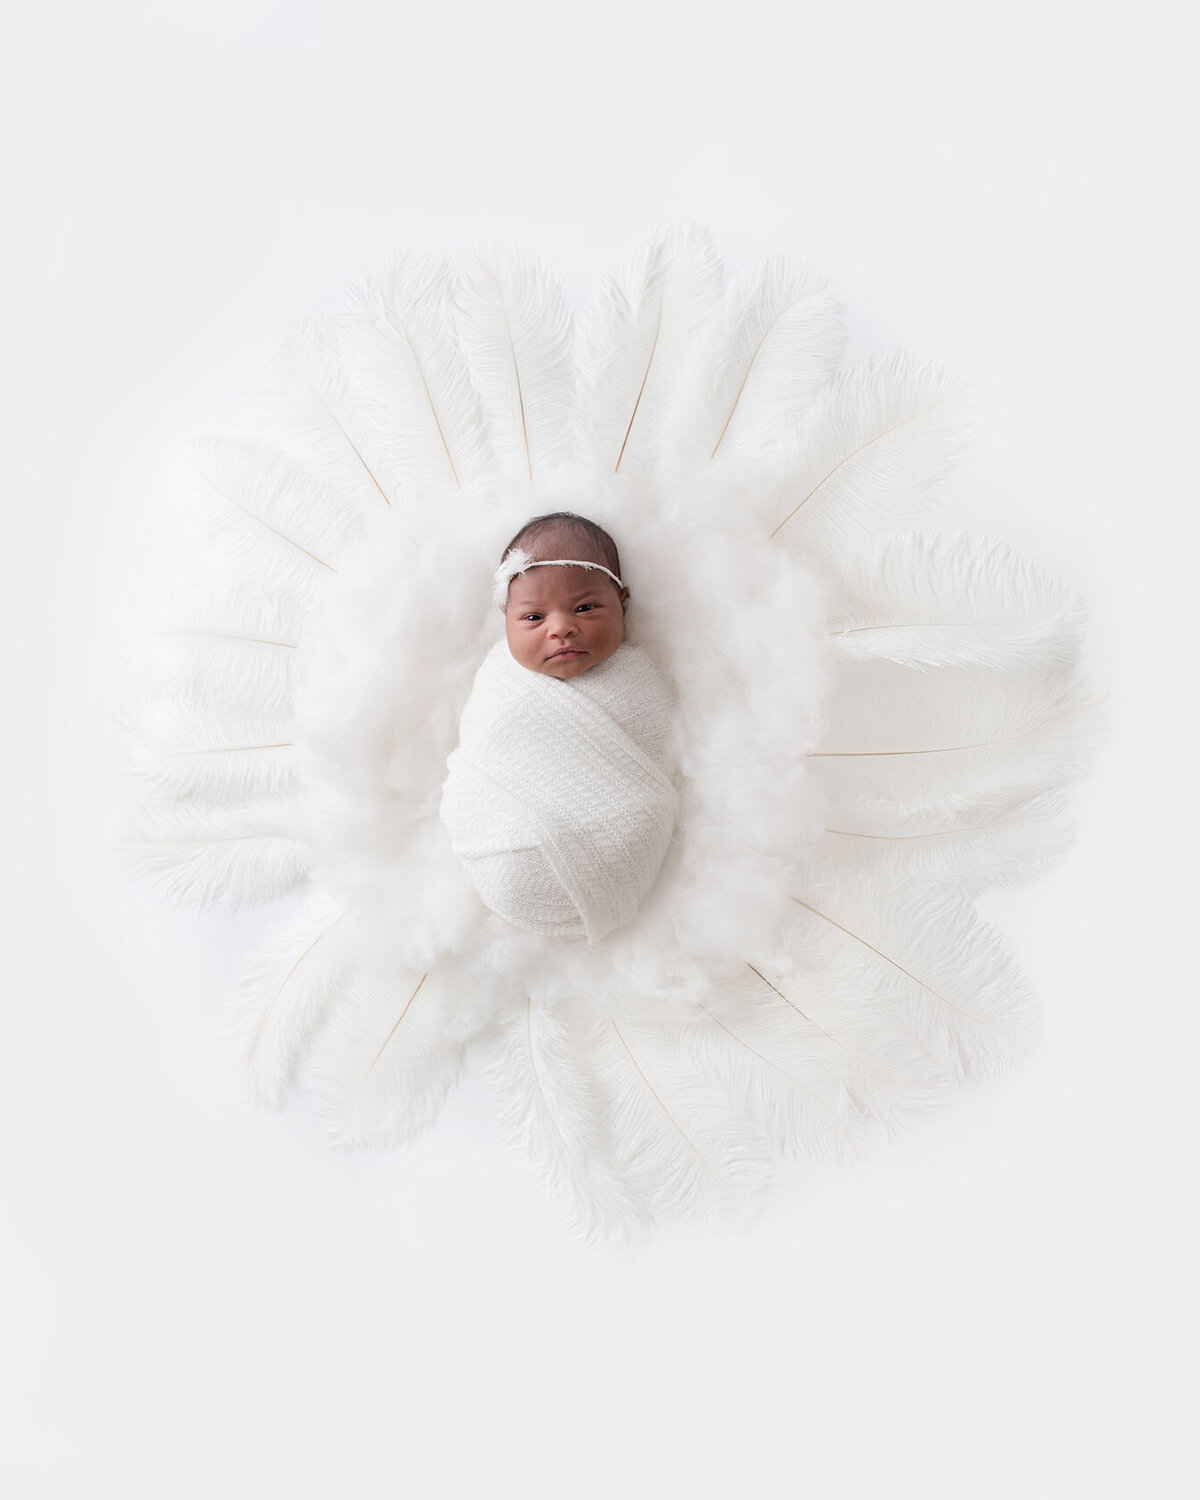 Newborn in white Photo Session in Houston